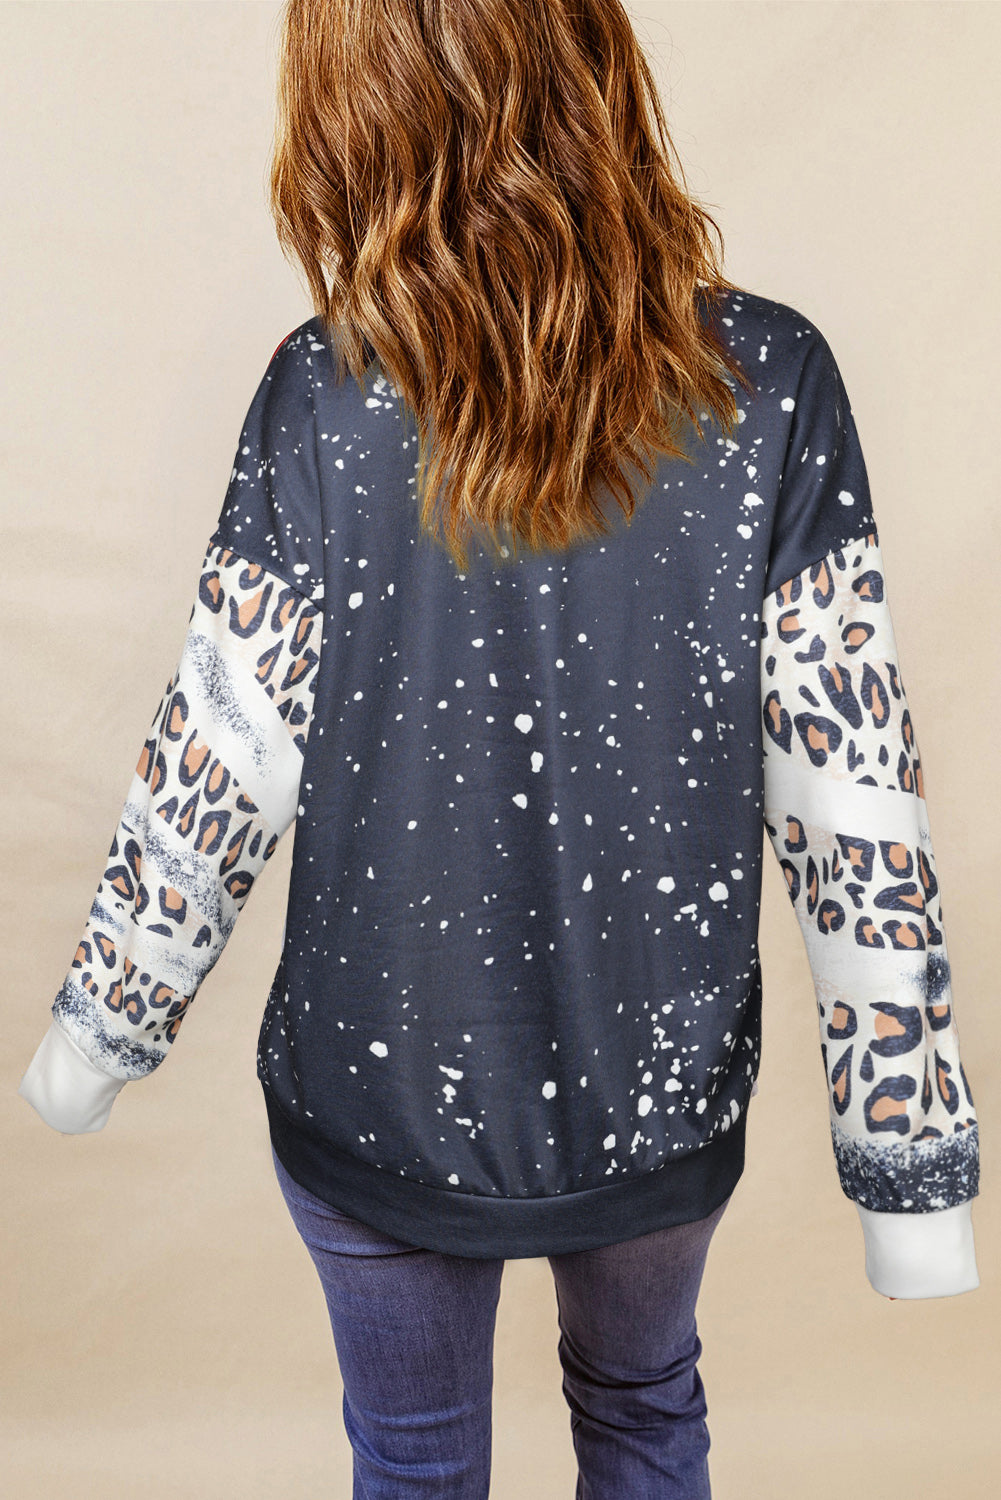 - MAMA Lightning Graphic Leopard Sweatshirt - womens sweatshirt at TFC&H Co.